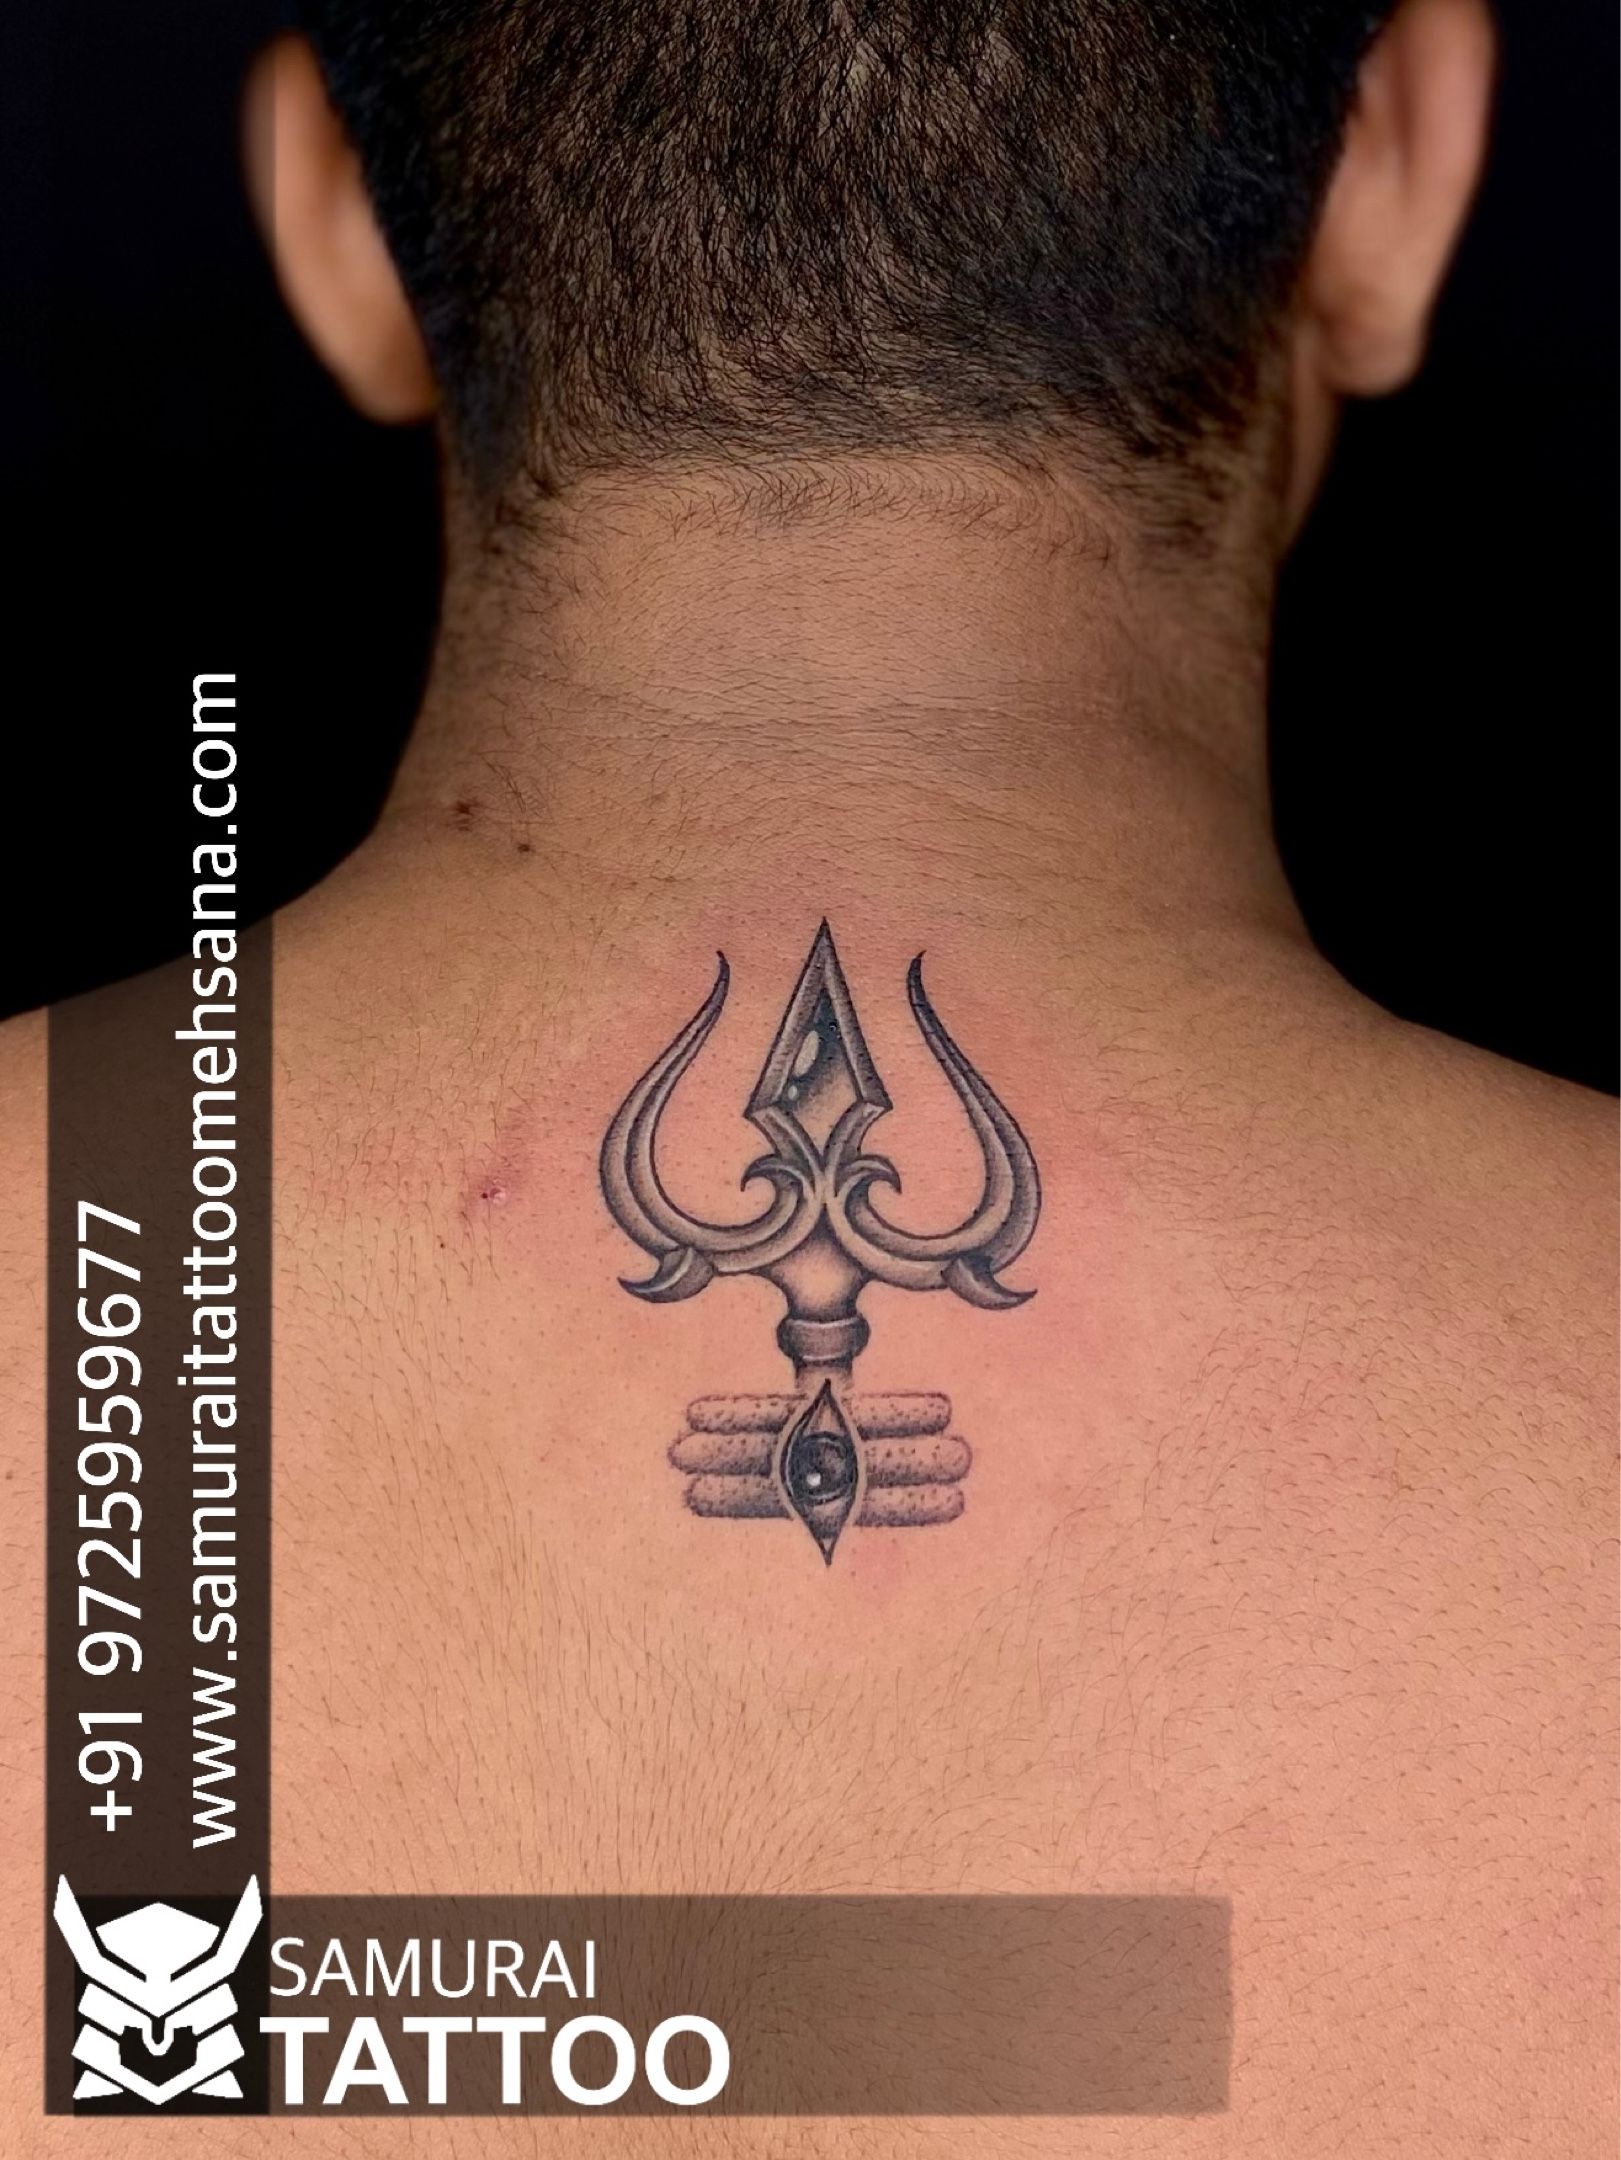 Trishul Tattoo on Hand with Mahamrityunjay Mantra: Embrace the Divine  Symbolism